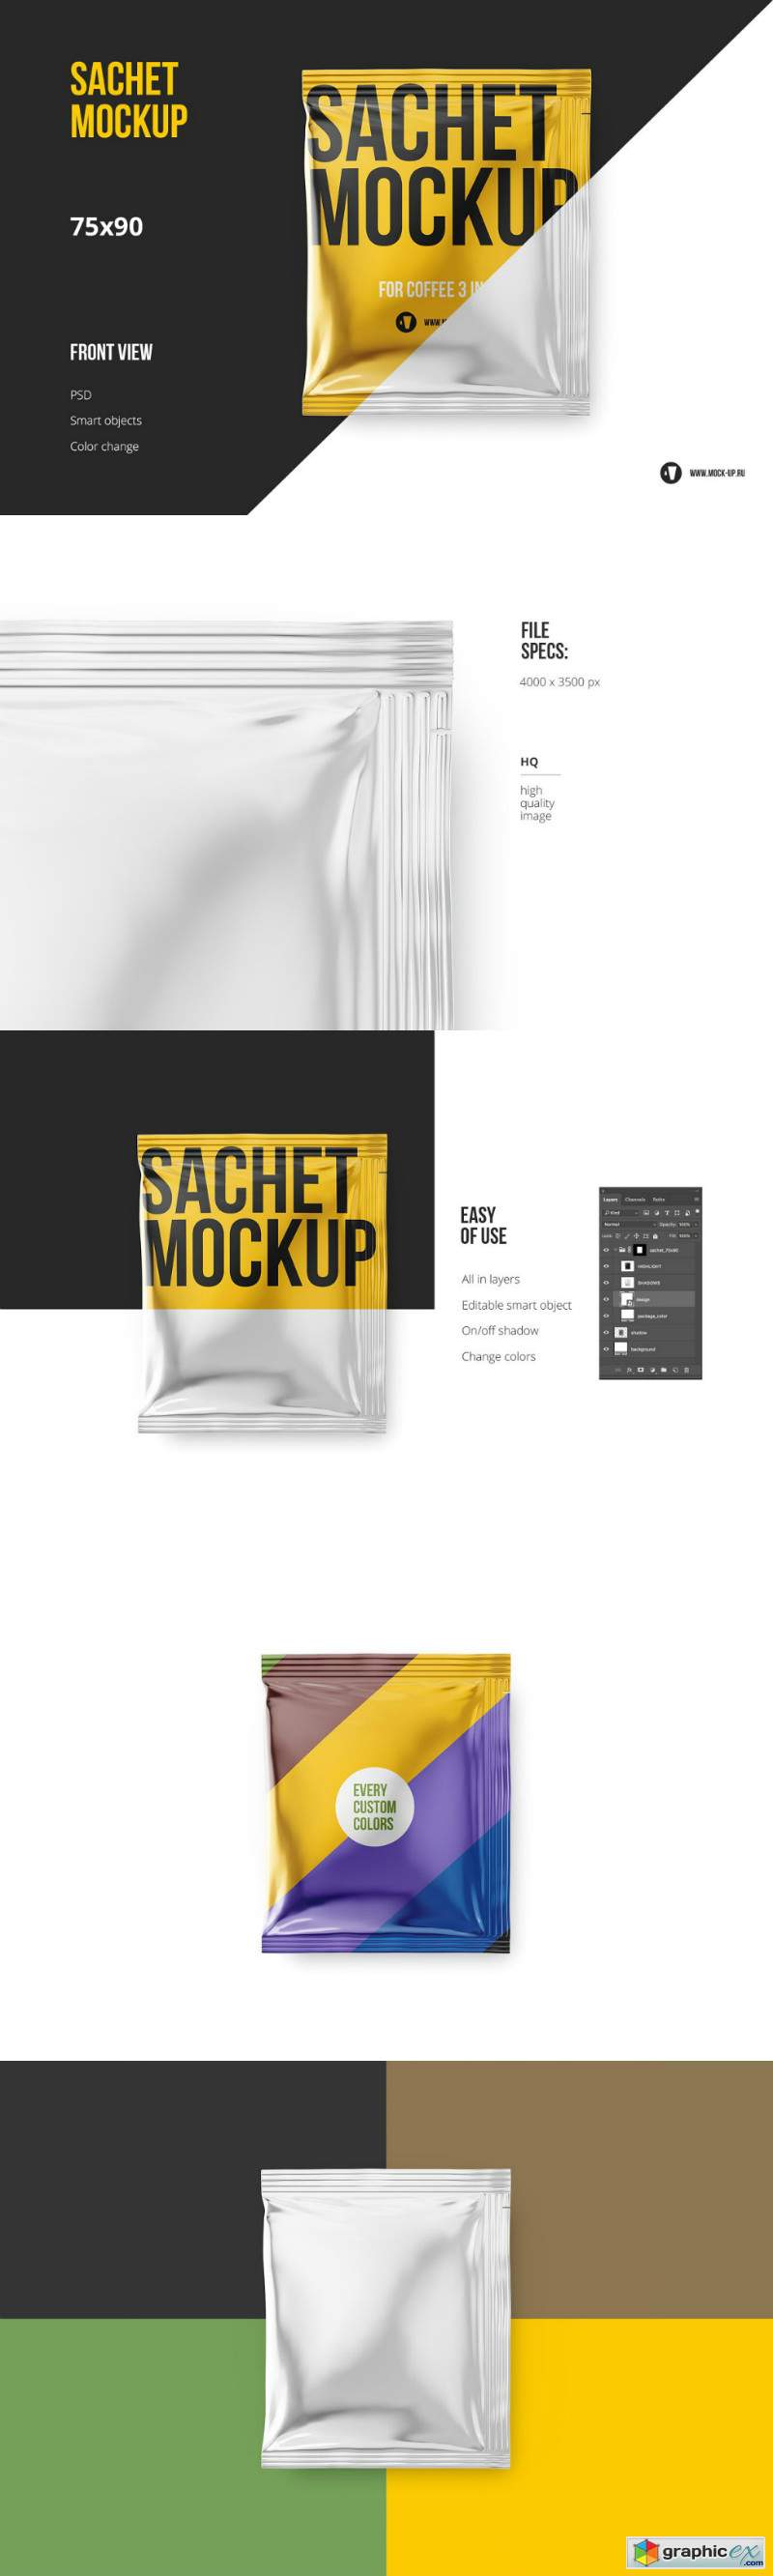 Sachet. Coffee. Ketchup. Shampoo